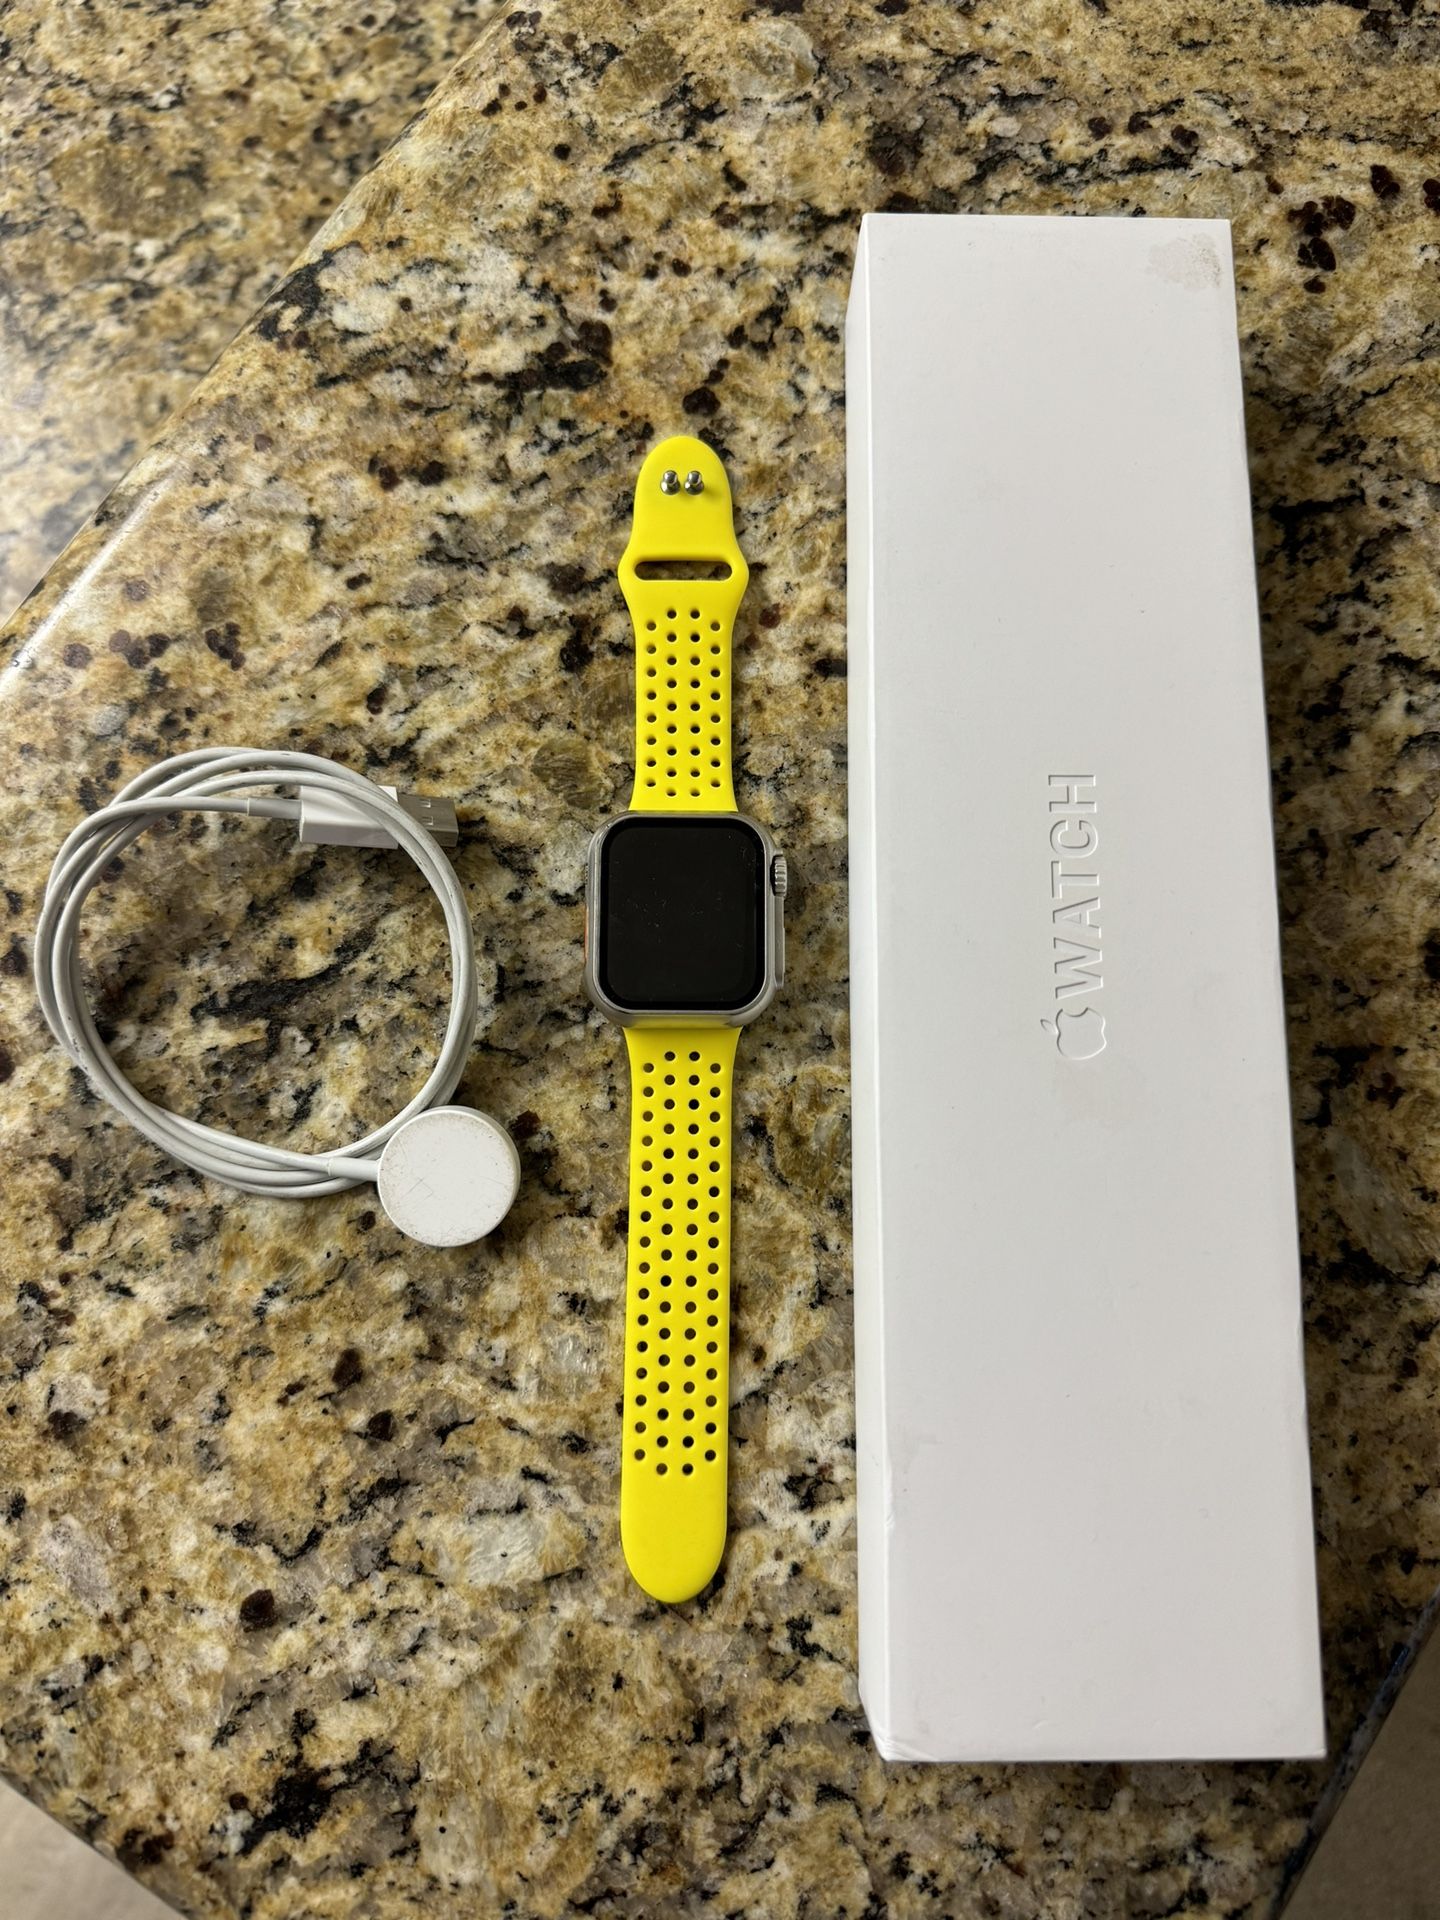 Apple Watch 6 Cellular GPS w screen protector, box